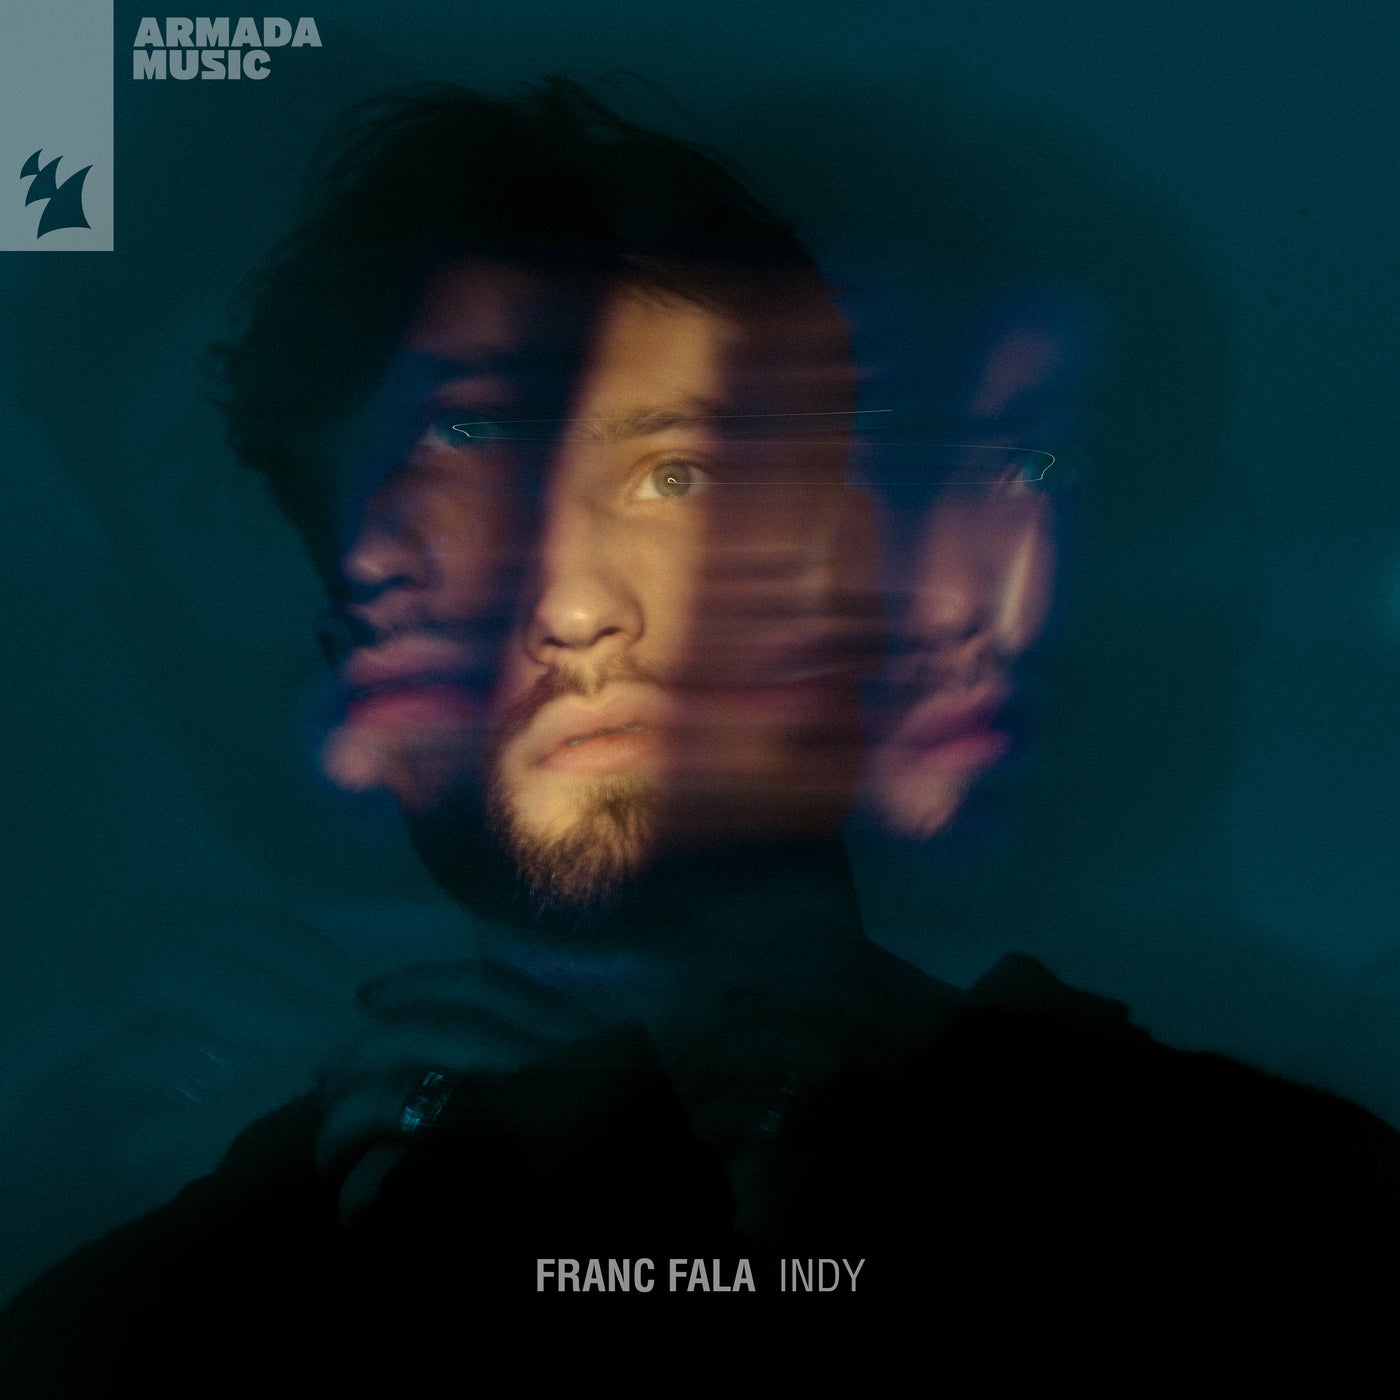 image cover: Franc Fala - Indy on Armada Music